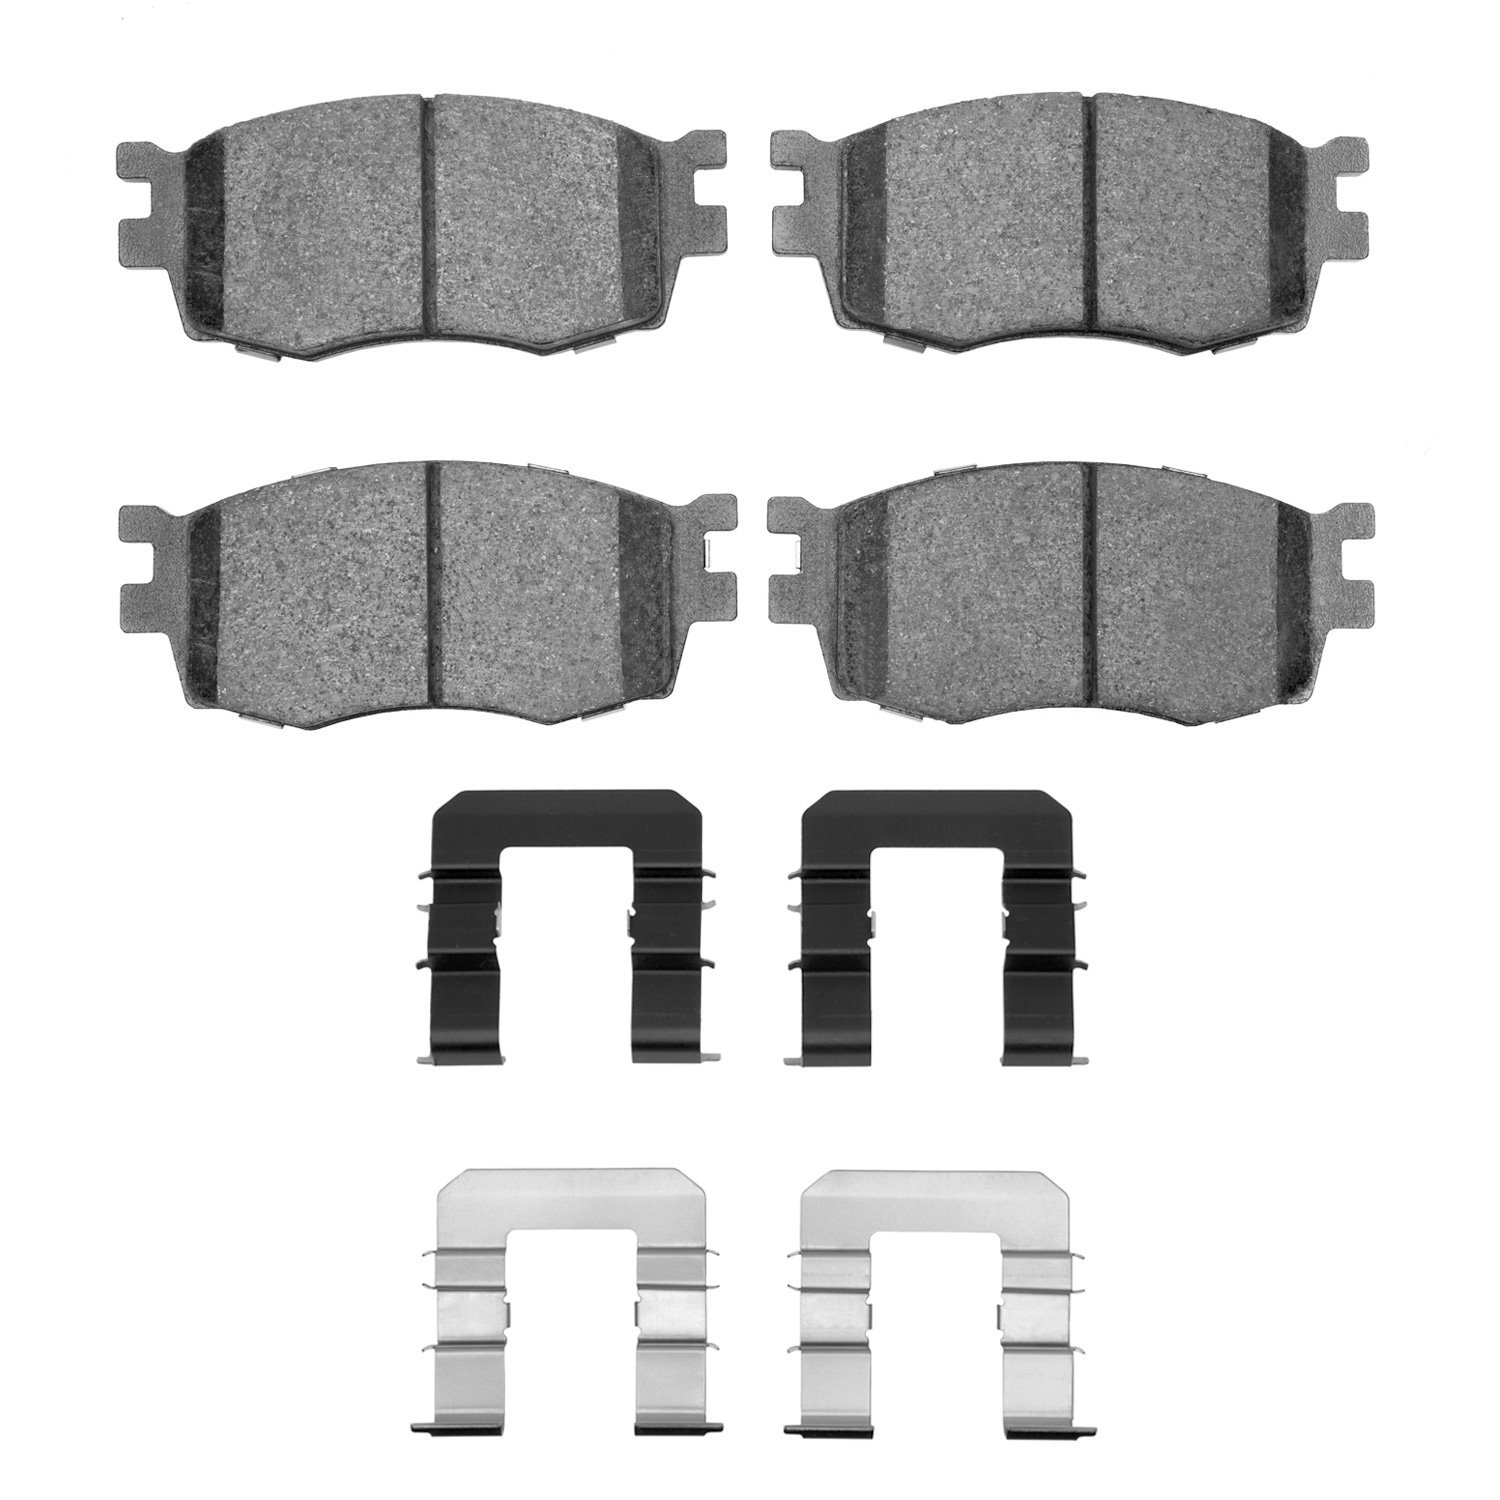 1310-1156-01 3000-Series Ceramic Brake Pads & Hardware Kit, 2006-2012 Multiple Makes/Models, Position: Front